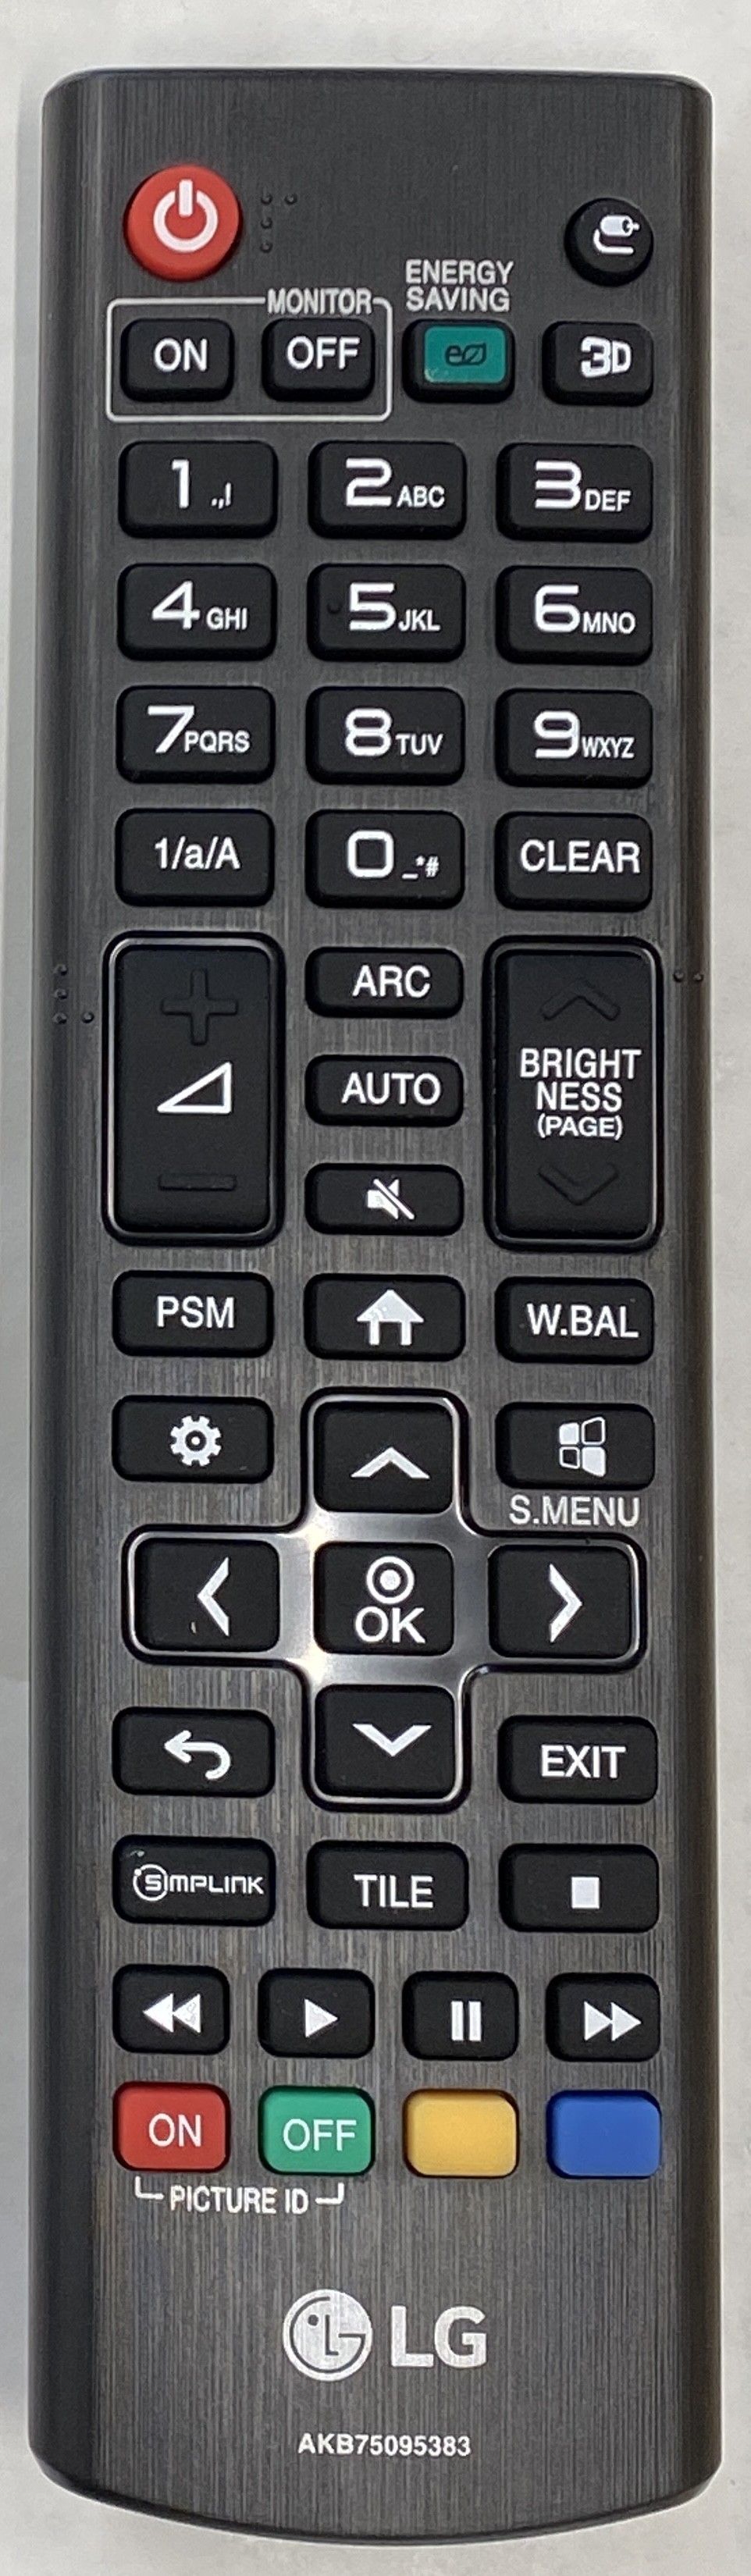 LG 65UL3G Remote Control Original 